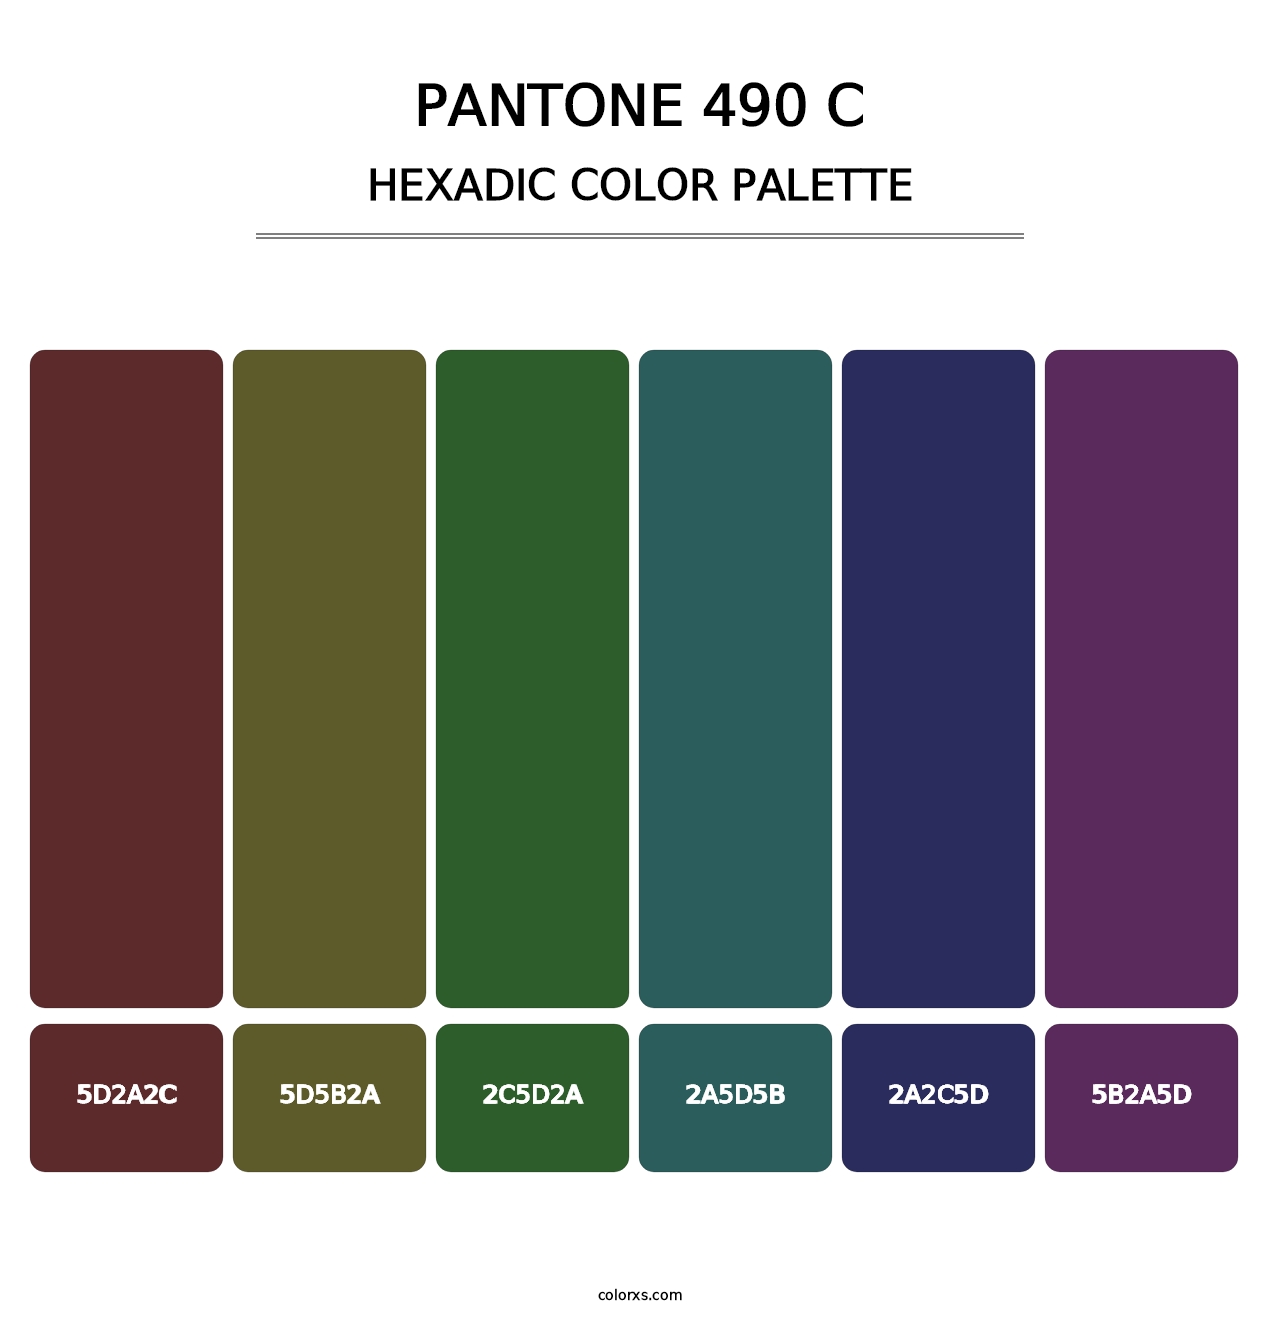 PANTONE 490 C - Hexadic Color Palette